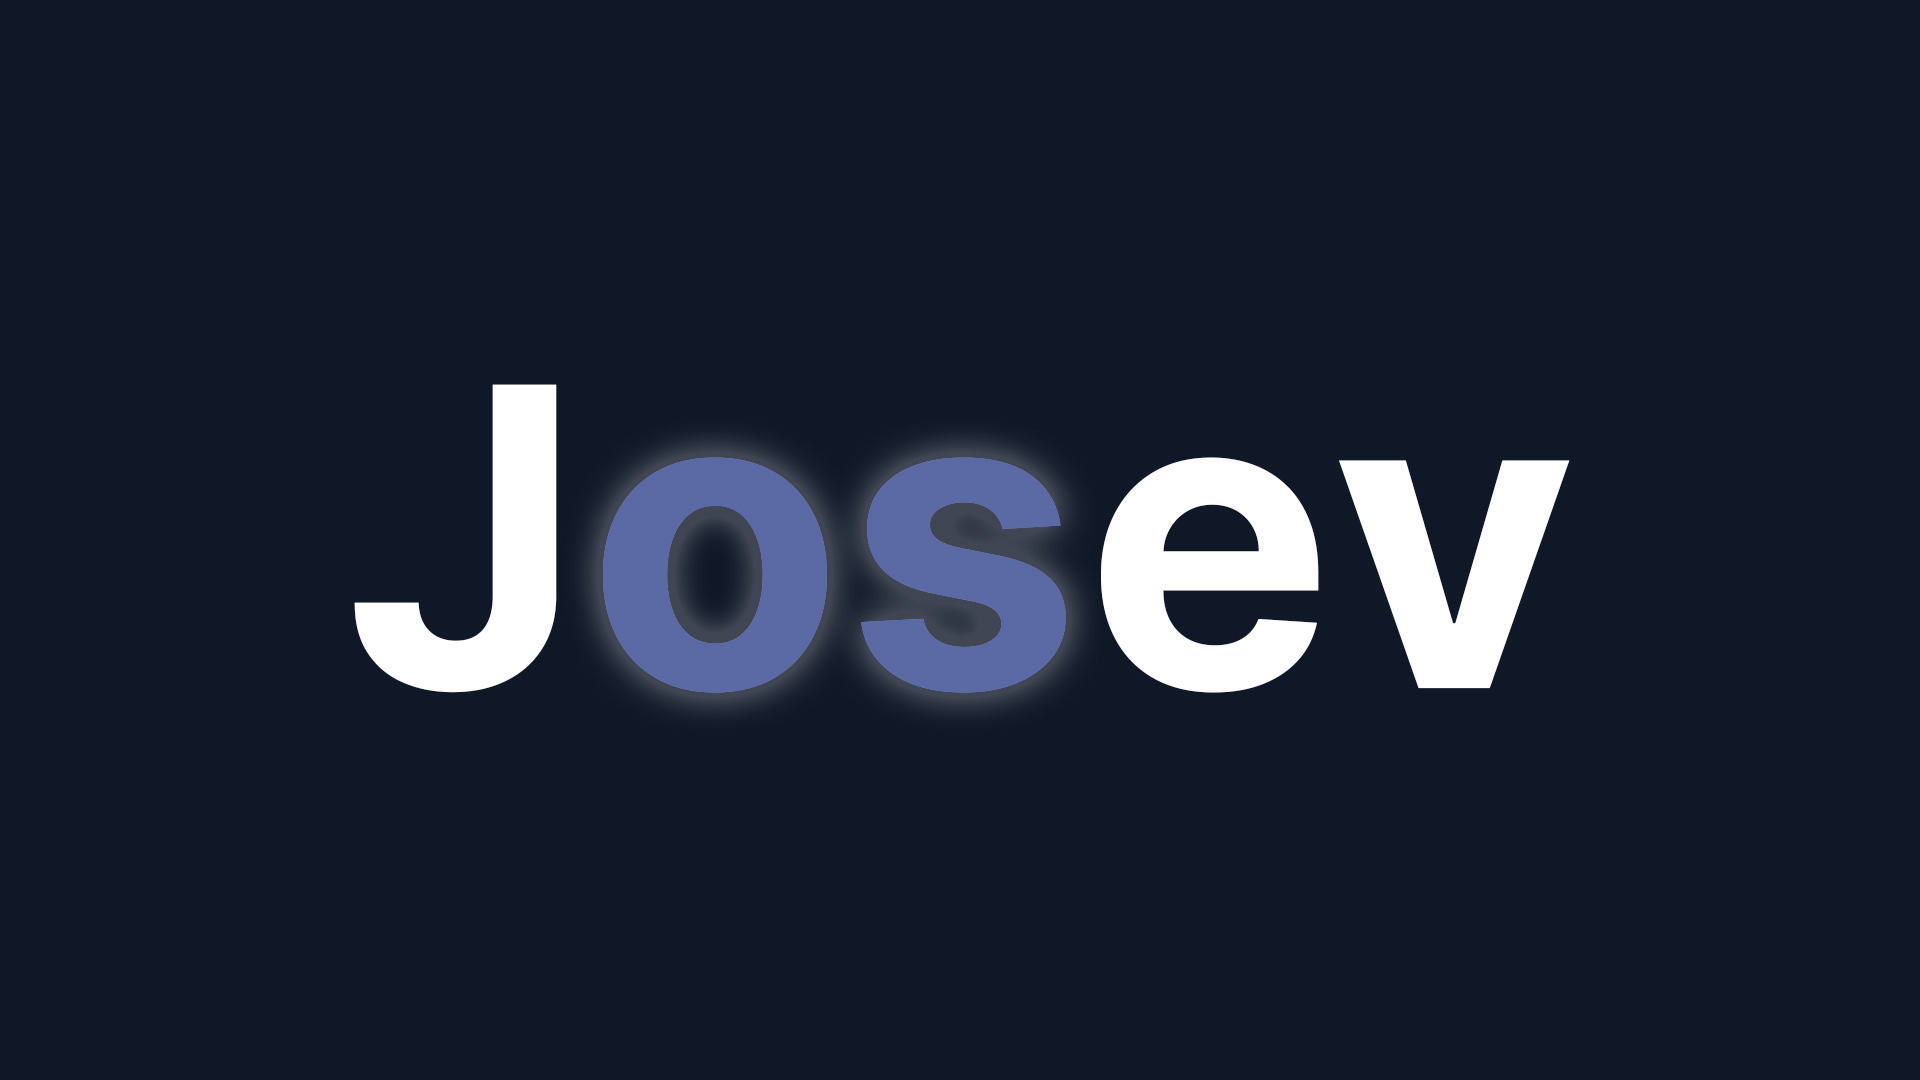 _images/josev-logo.jpg